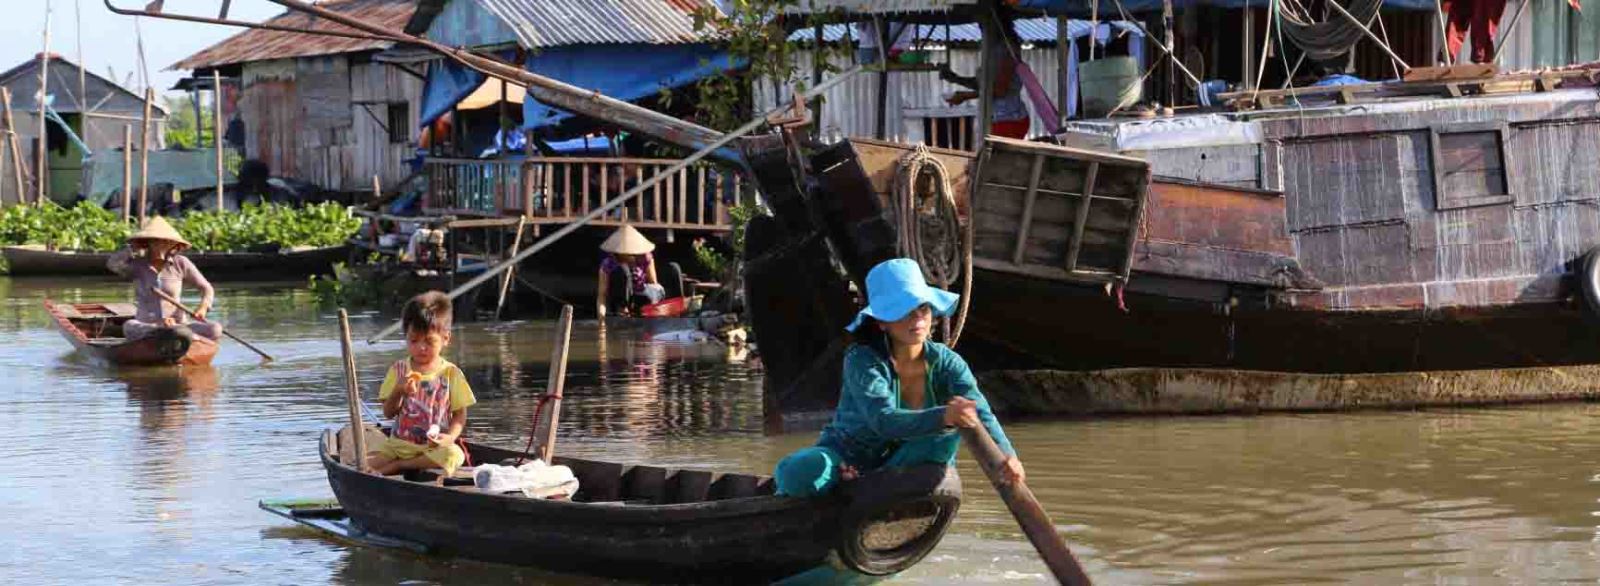 Villaggi galleggianti nel fiume Hau Giang